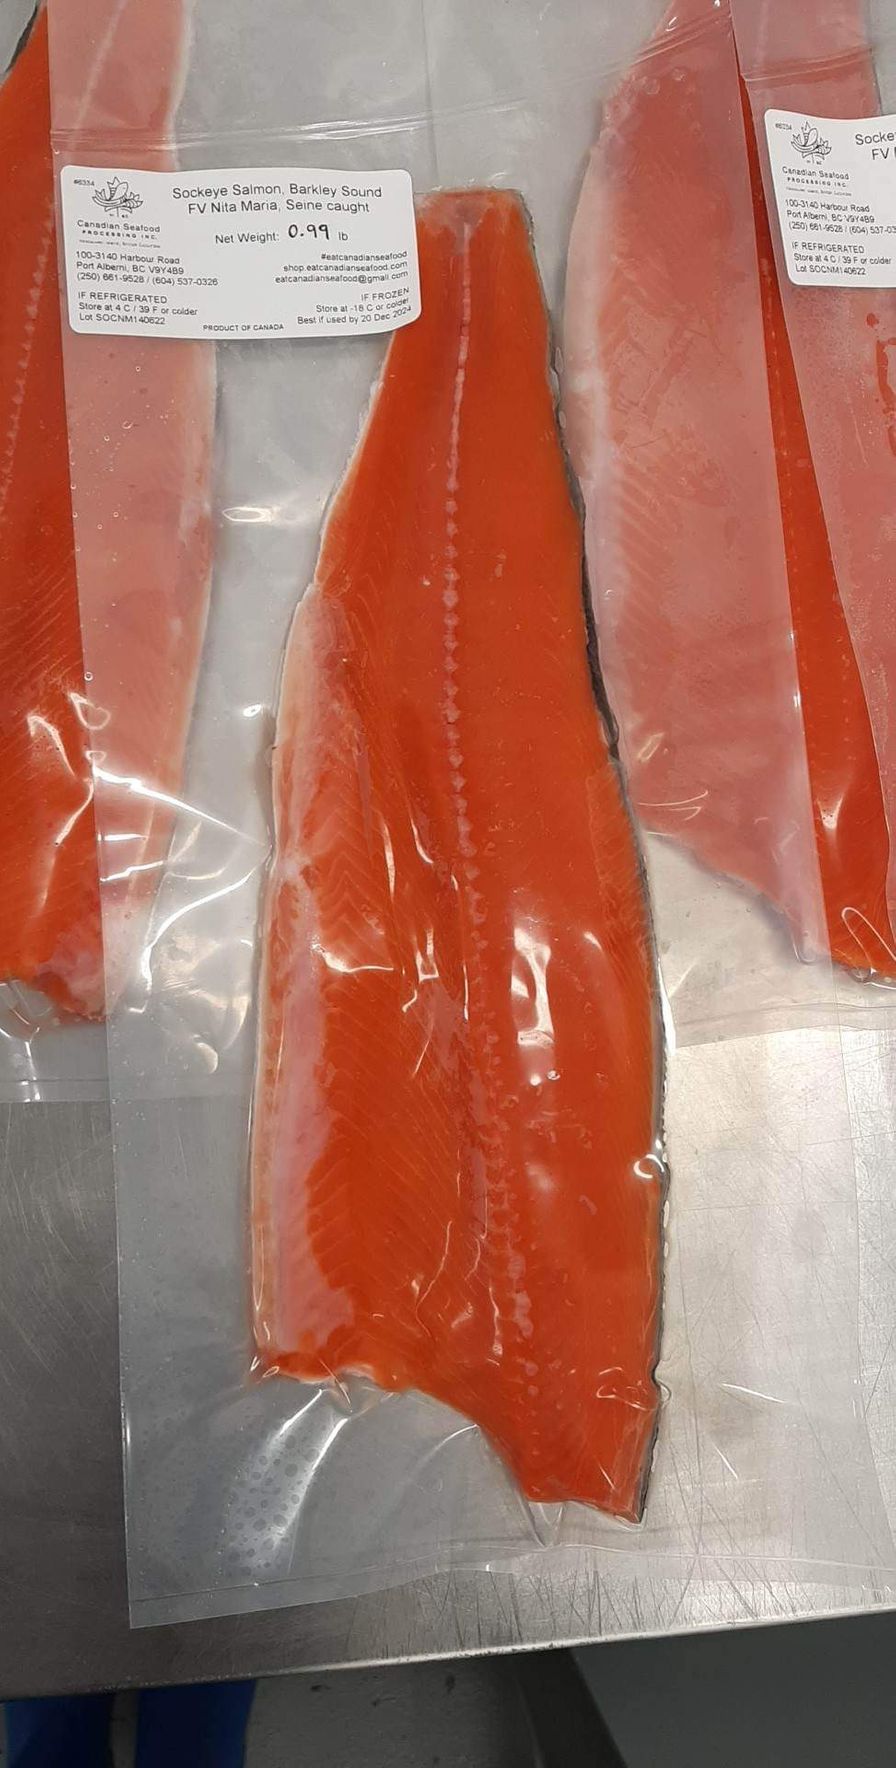 Sockeye Salmon sides - BC WILD